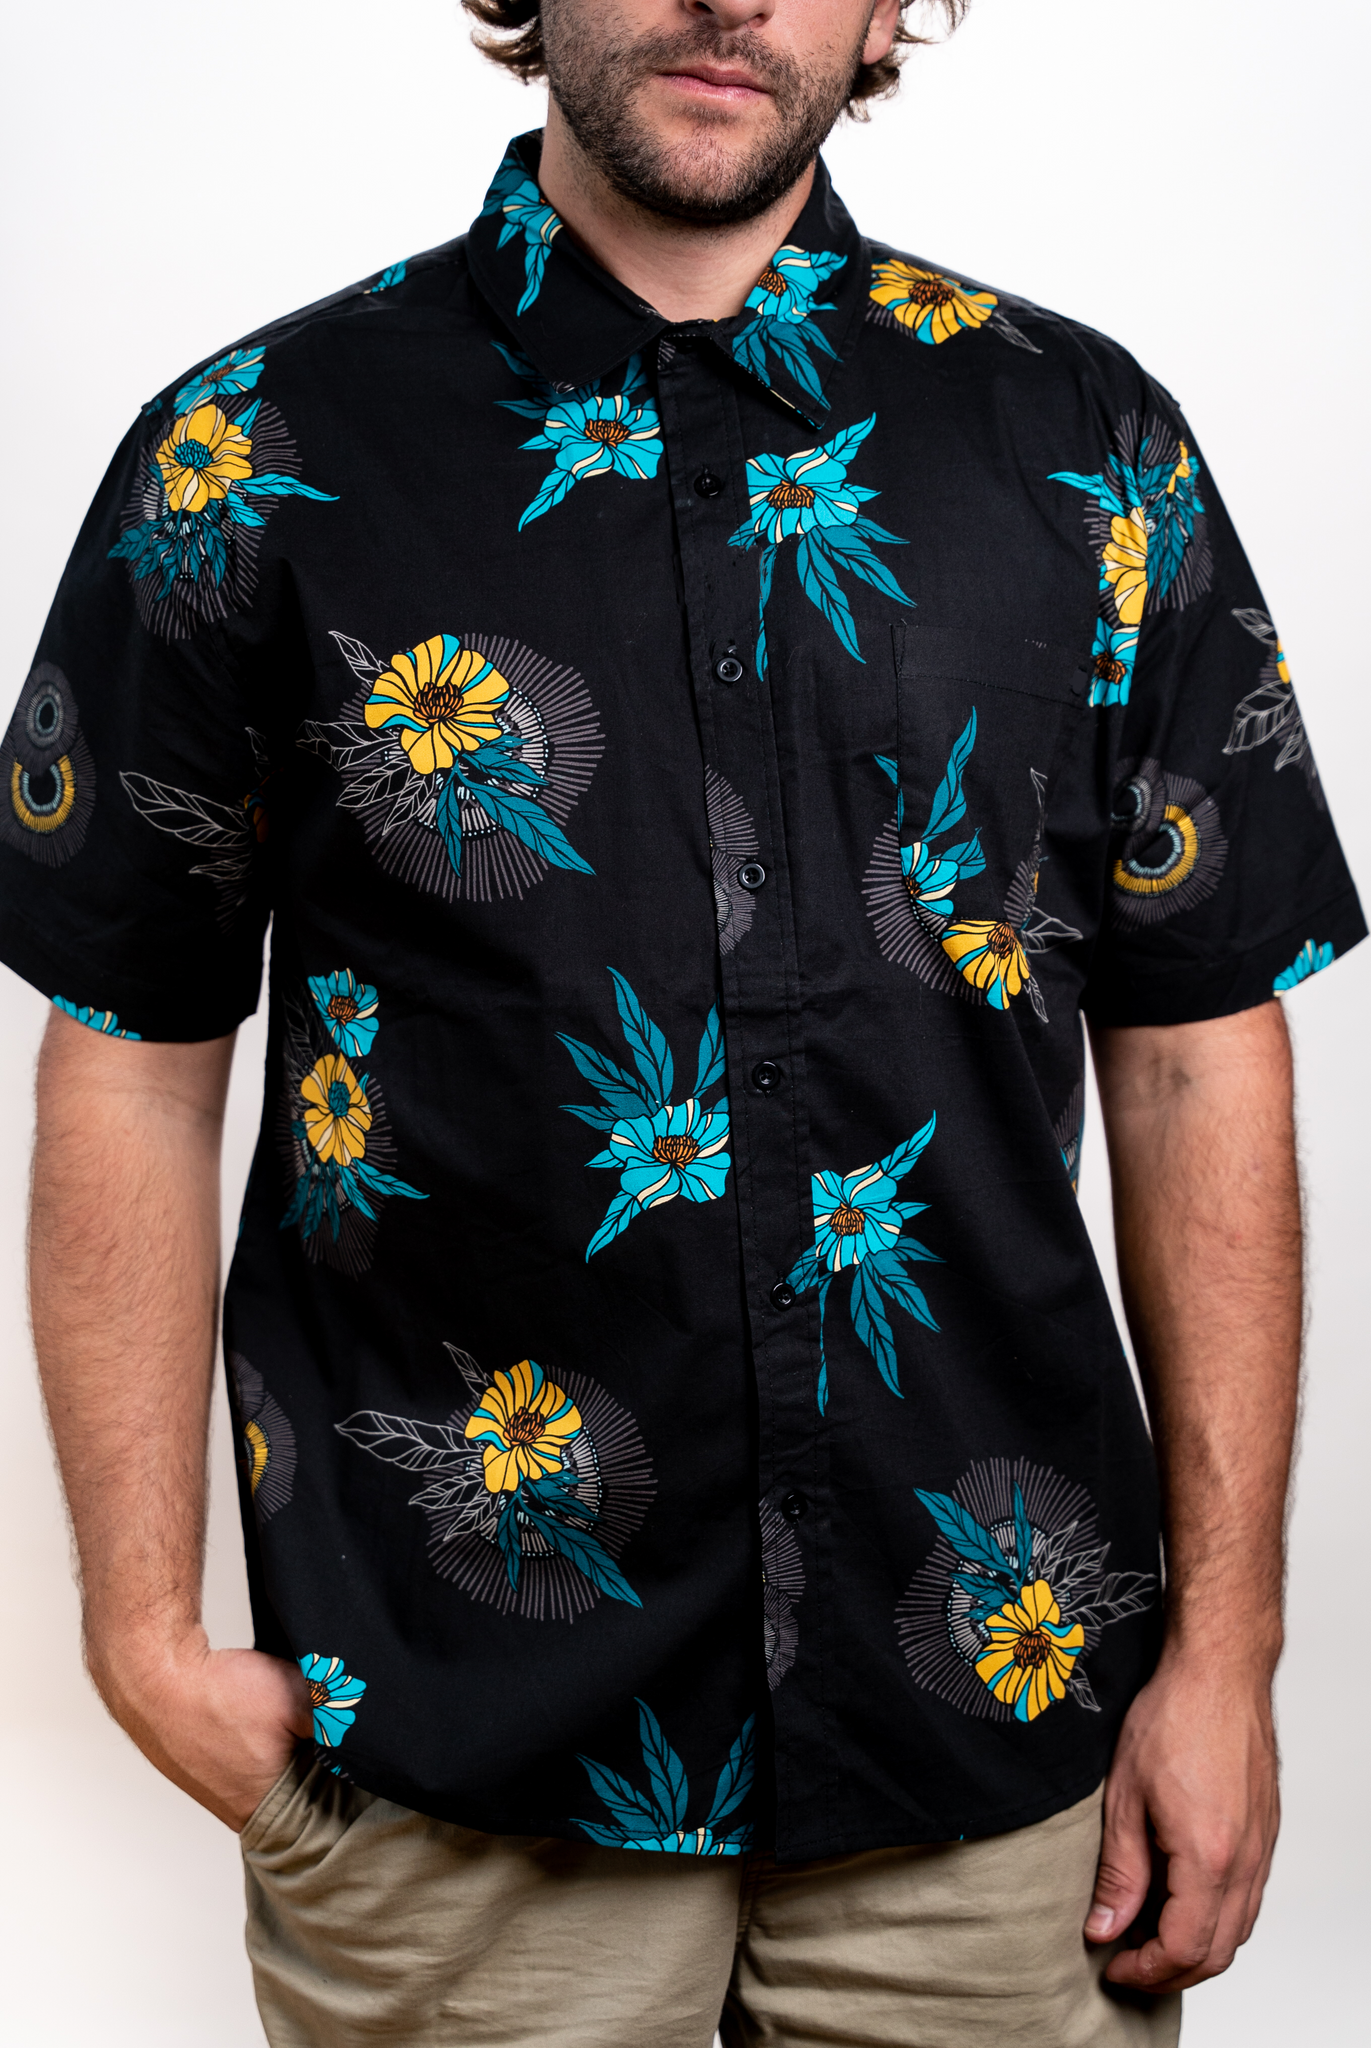 STSSW47 - Aloha Vibes SS Woven Black / S Shirts & Tops